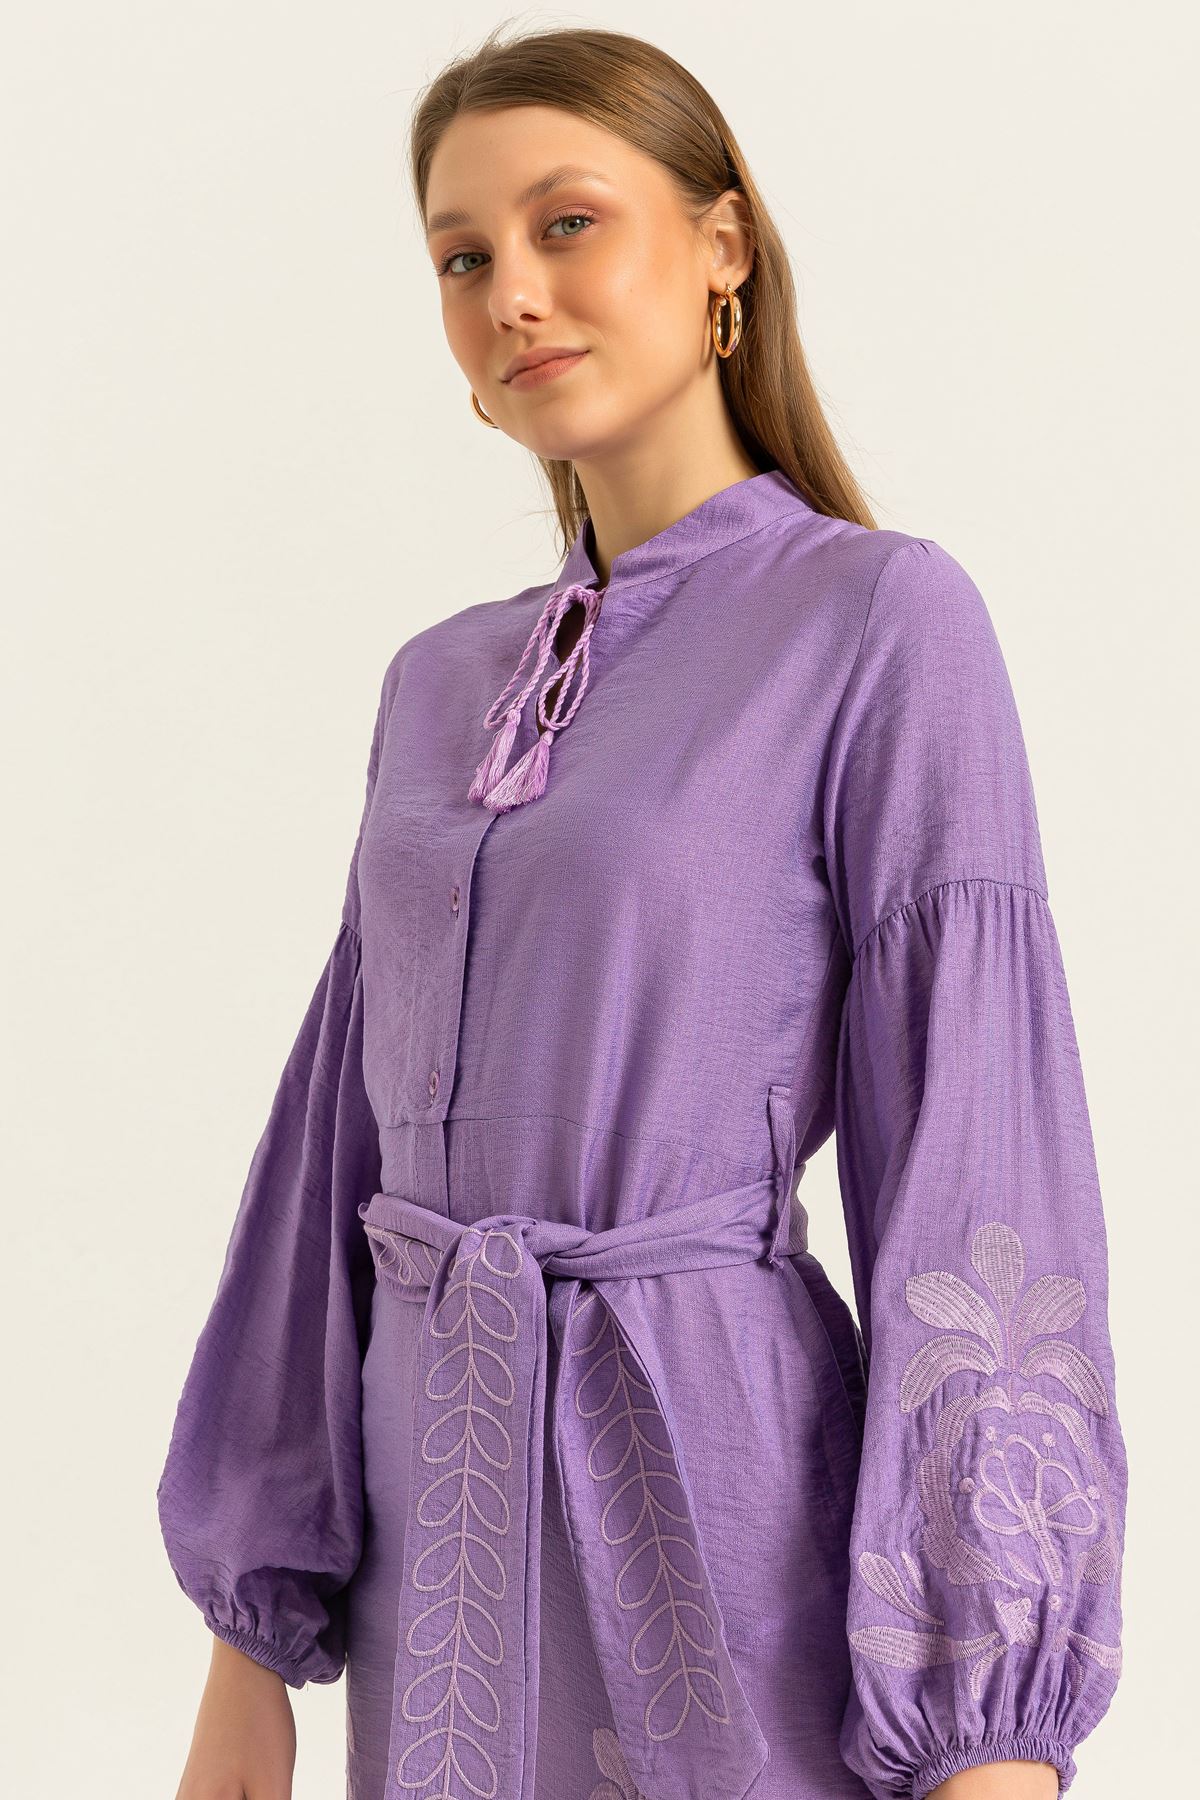 Linen Fabric Band Collar Embroidery Detailed Women Dress-Purple